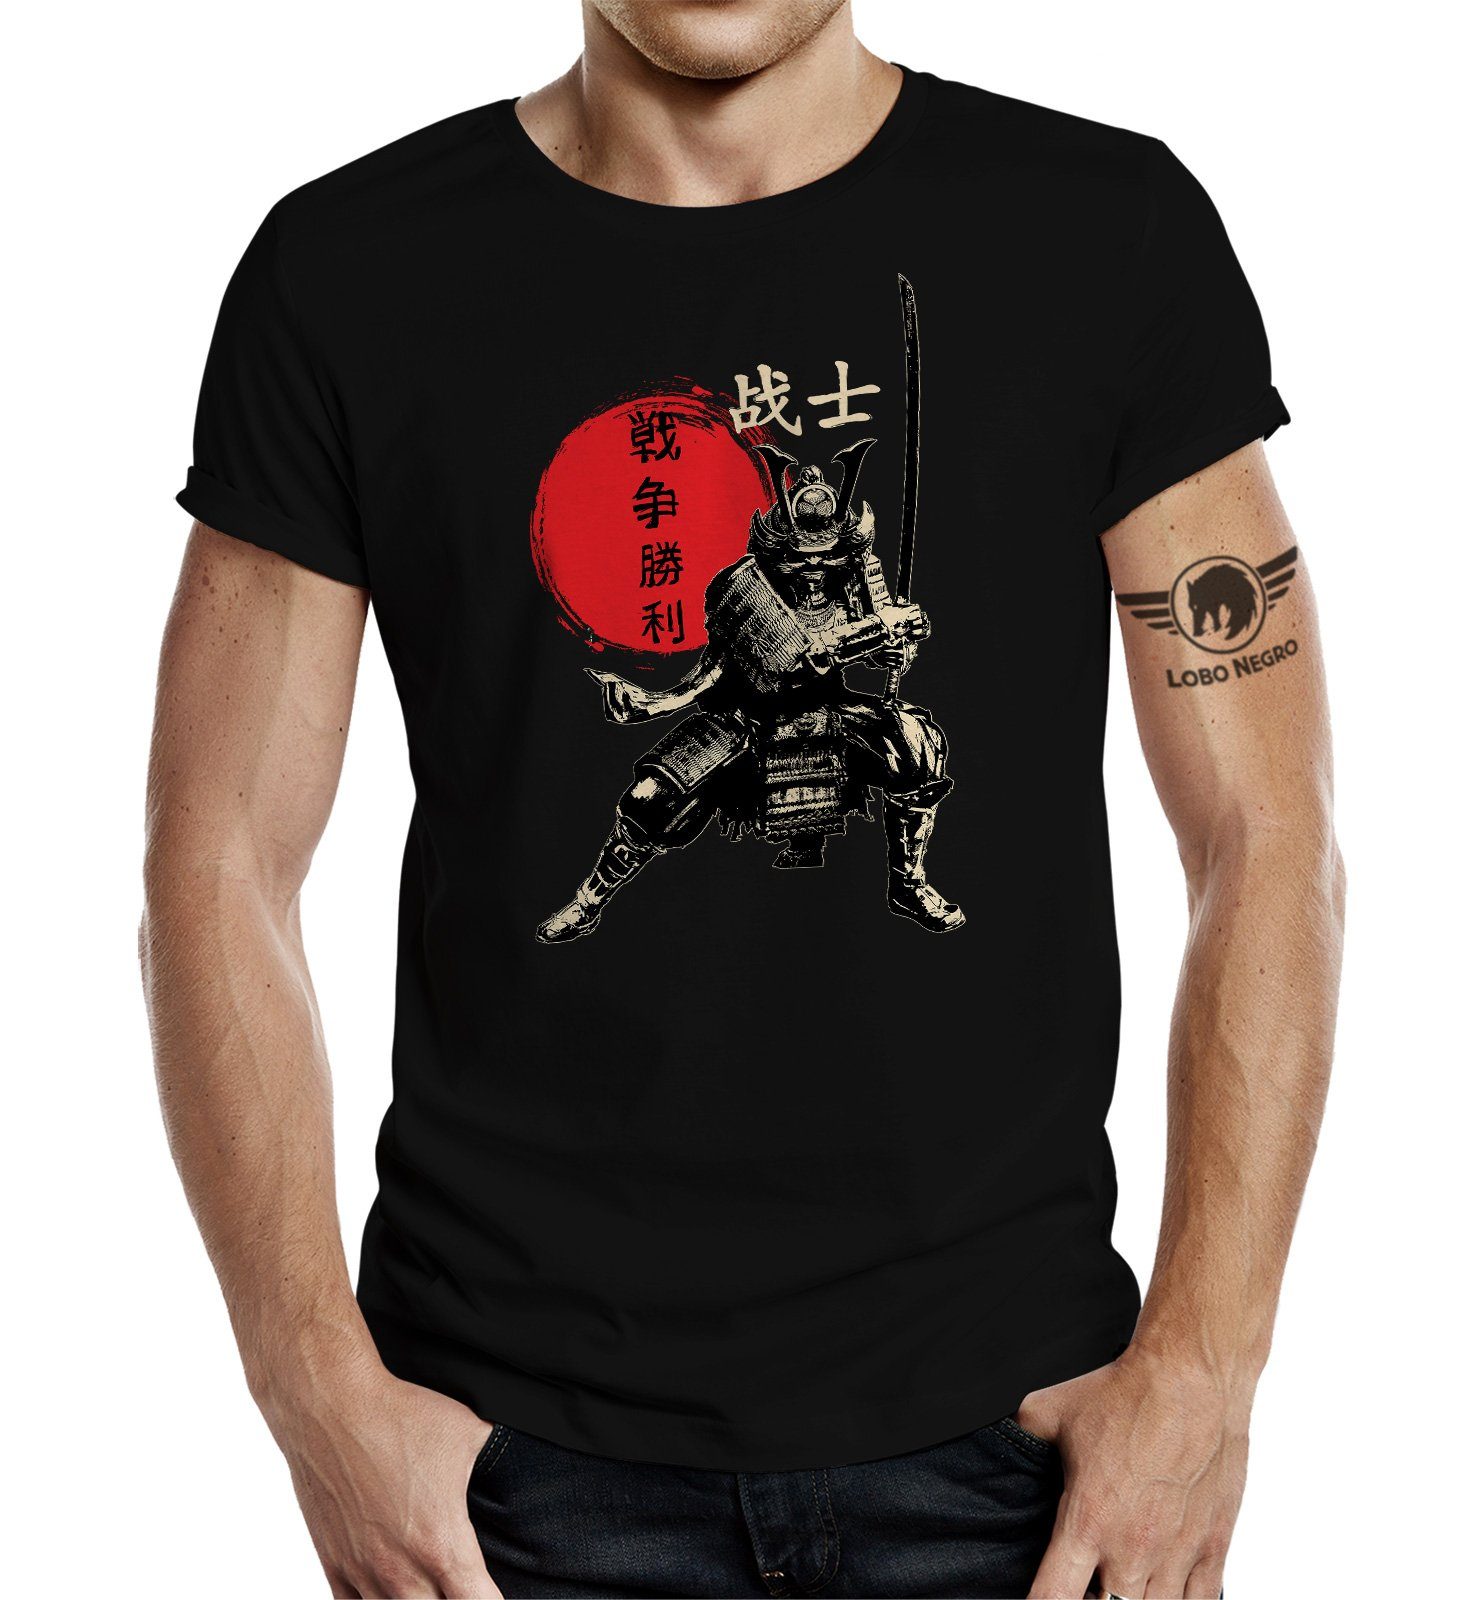 LOBO NEGRO® T-Shirt für Japan Tokio Samurai Warrior Fans: Kampfsport